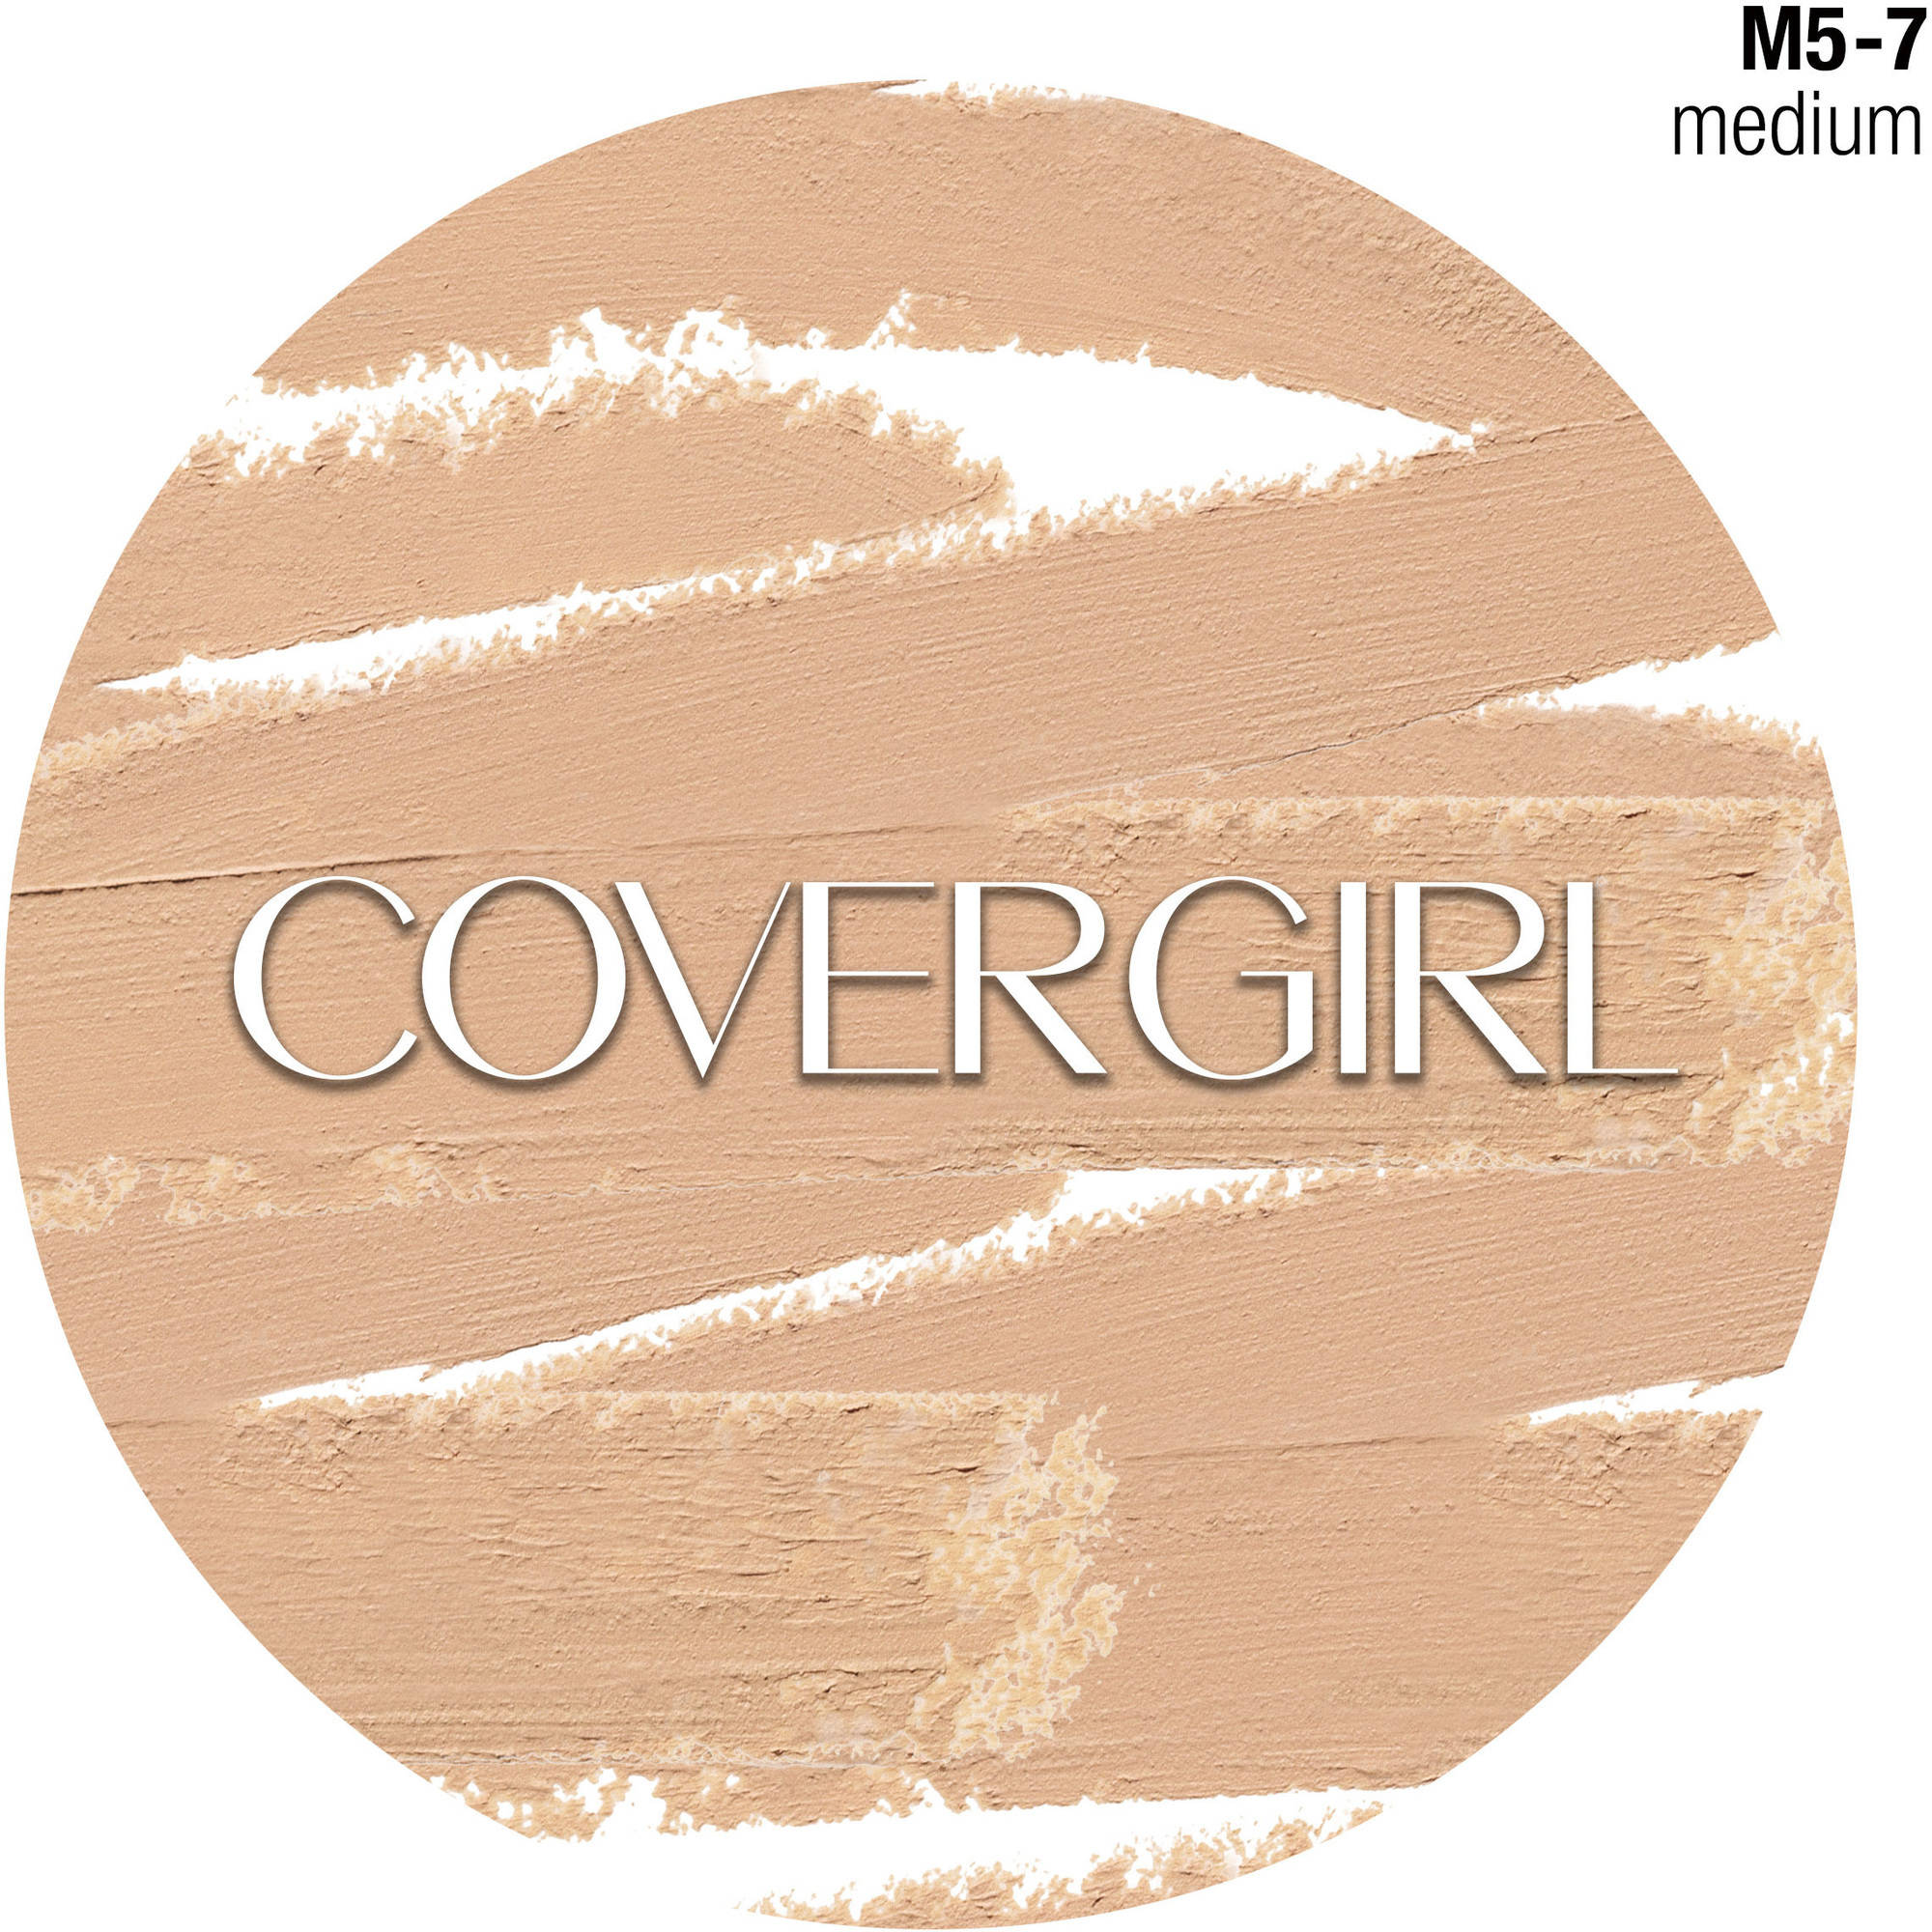 COVERGIRL truBlend FixStick Blendable Concealer, Medium M5-7 - image 3 of 5